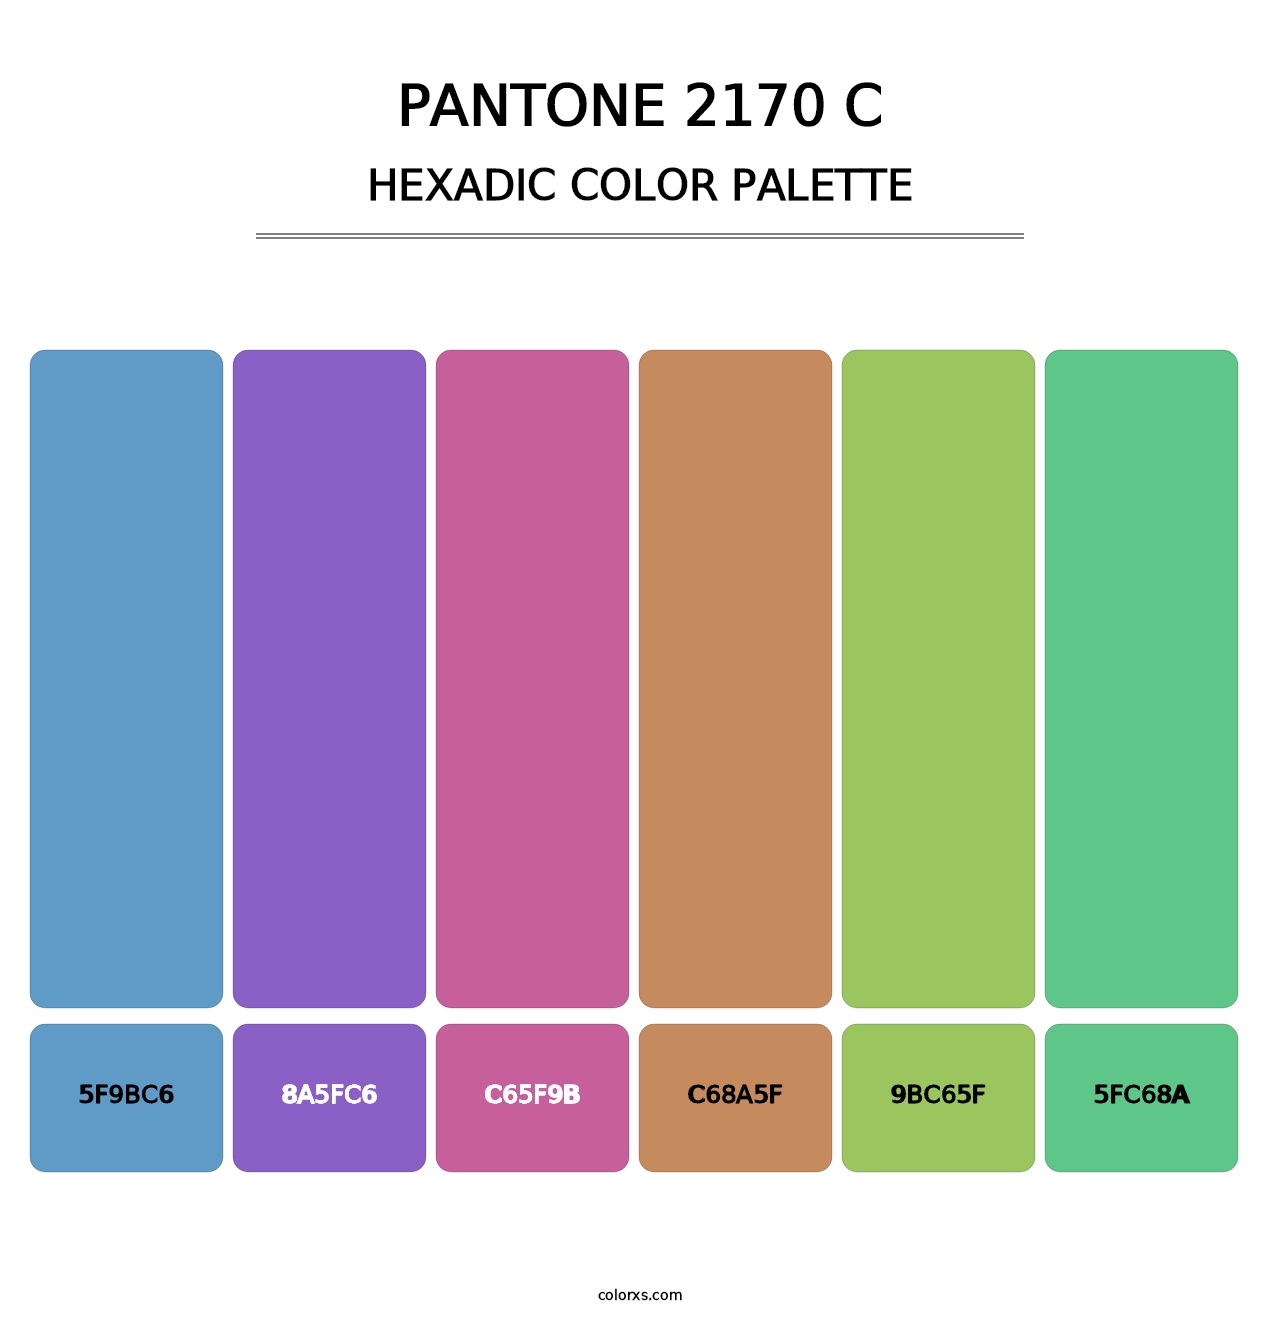 PANTONE 2170 C - Hexadic Color Palette